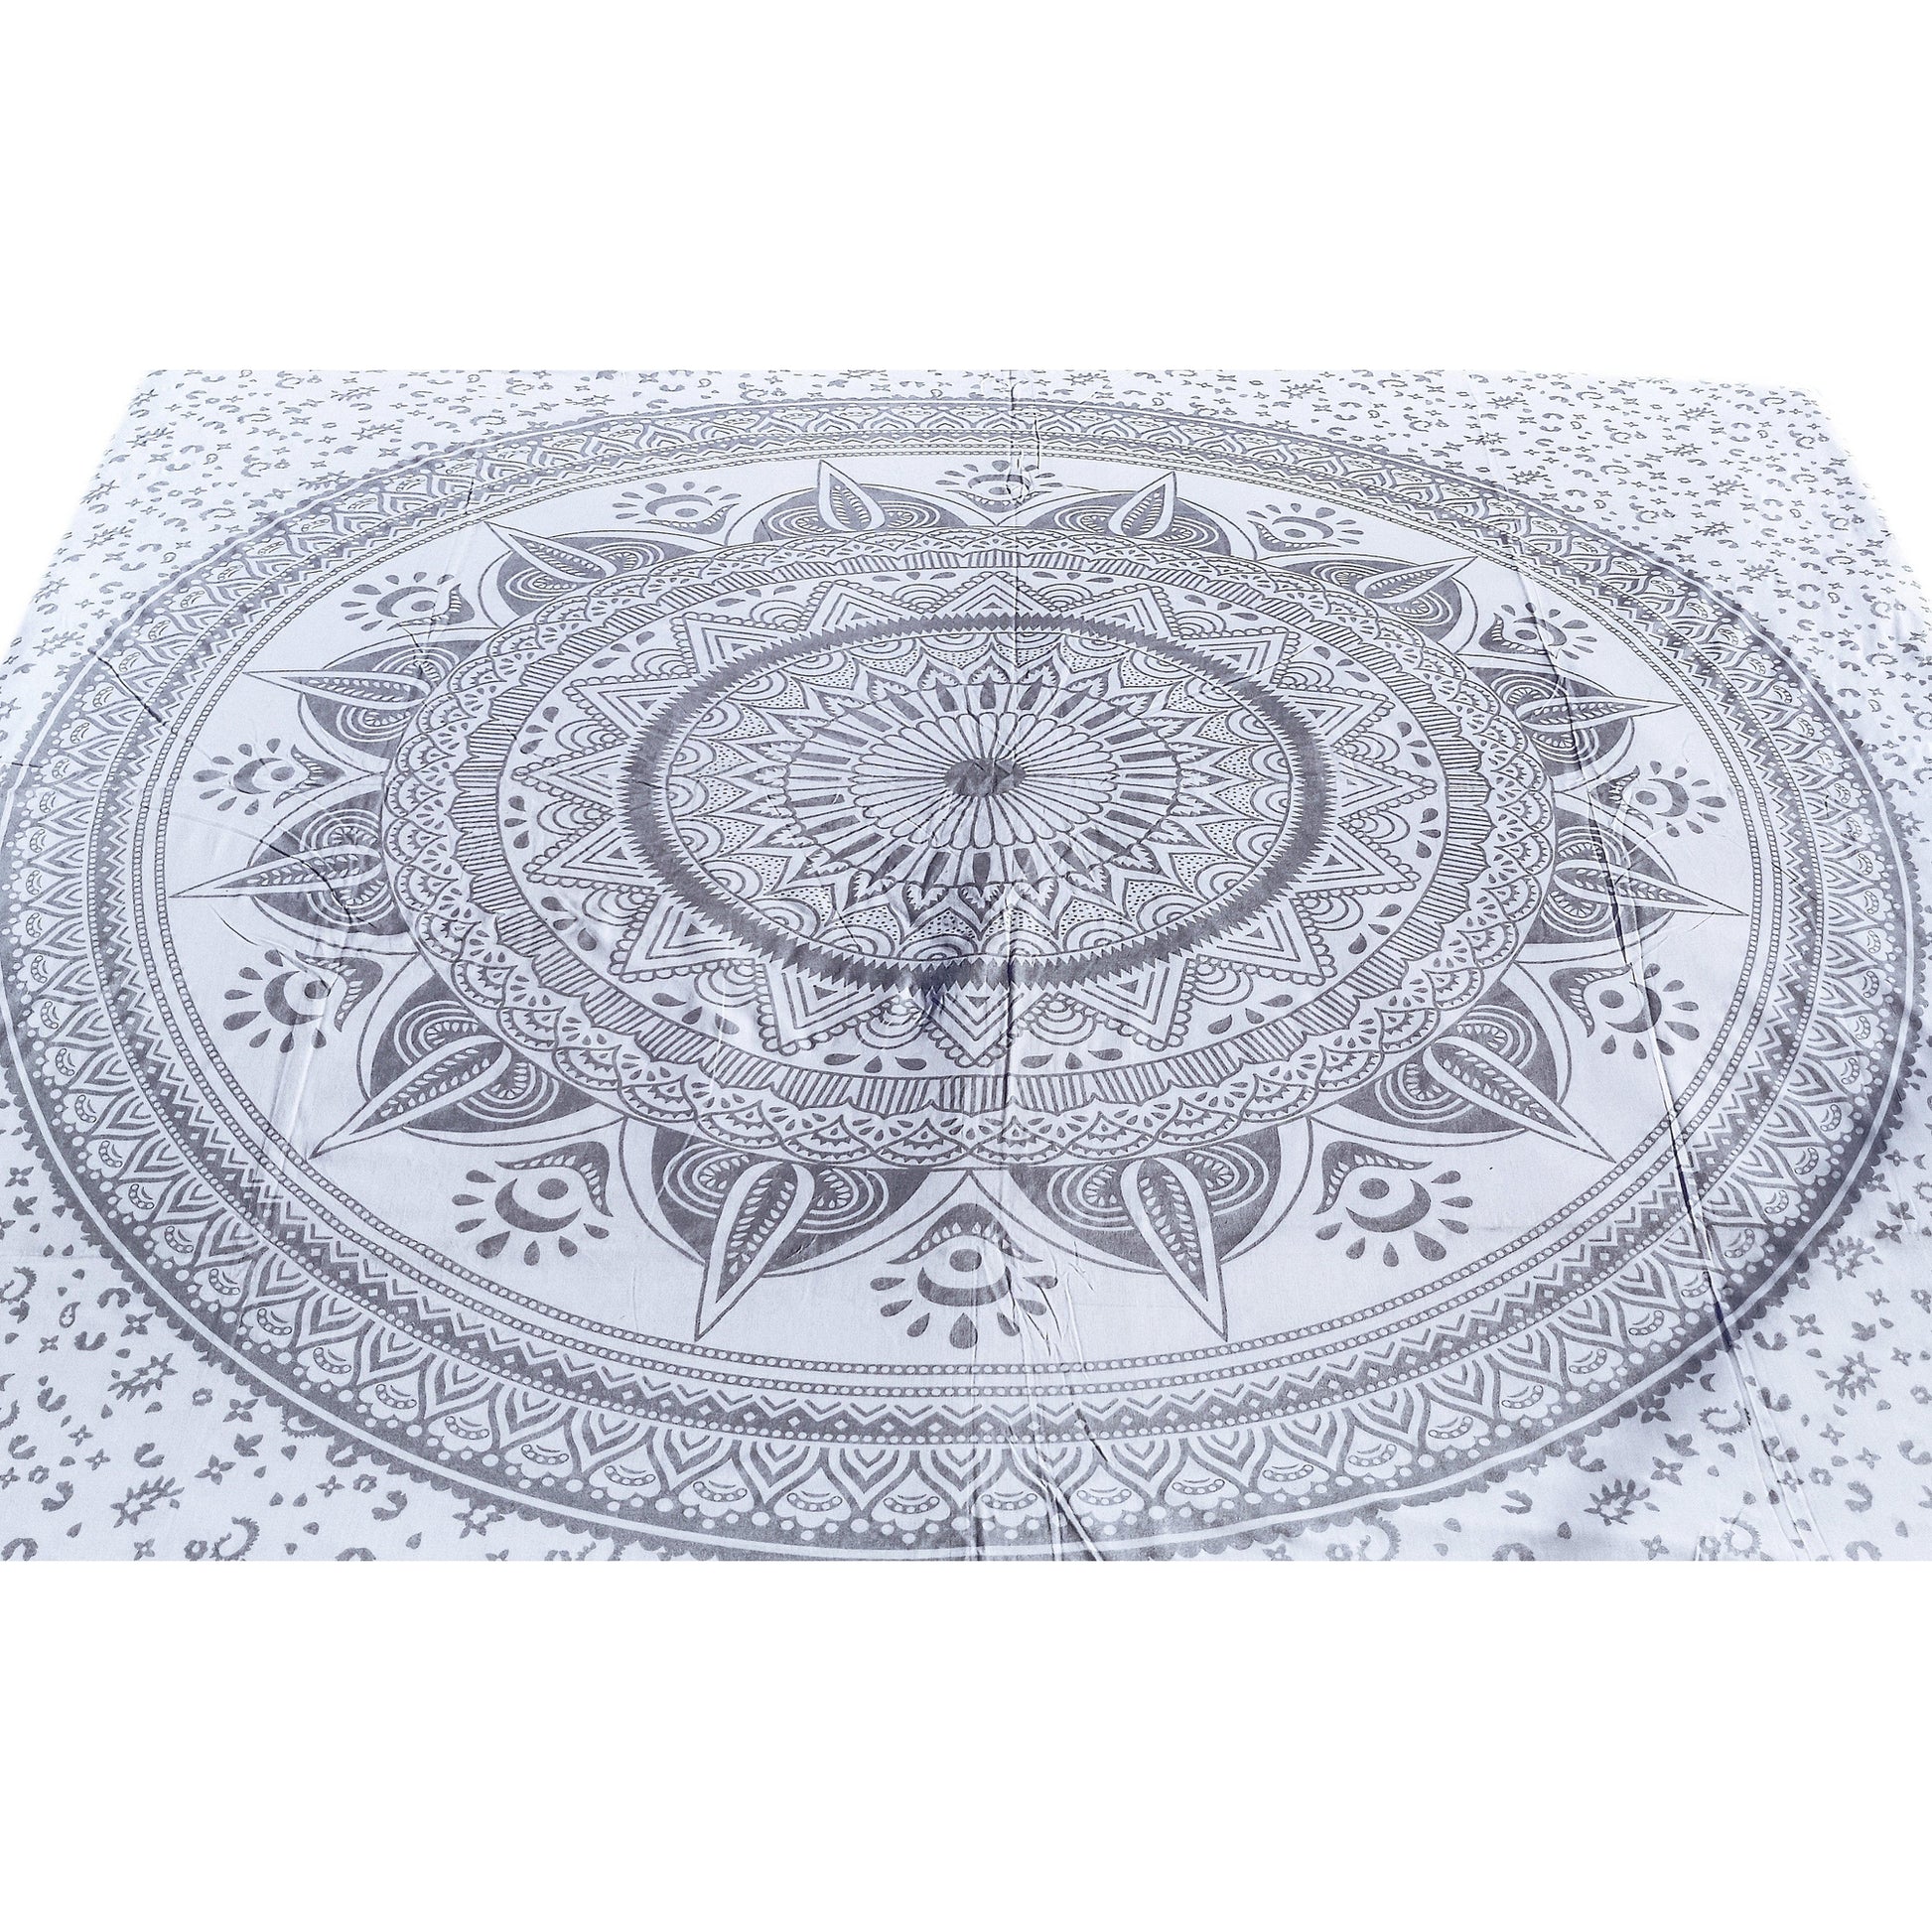 Queen Size Duvet Cover 83x83 inches-White Mandala - The Teal Thread